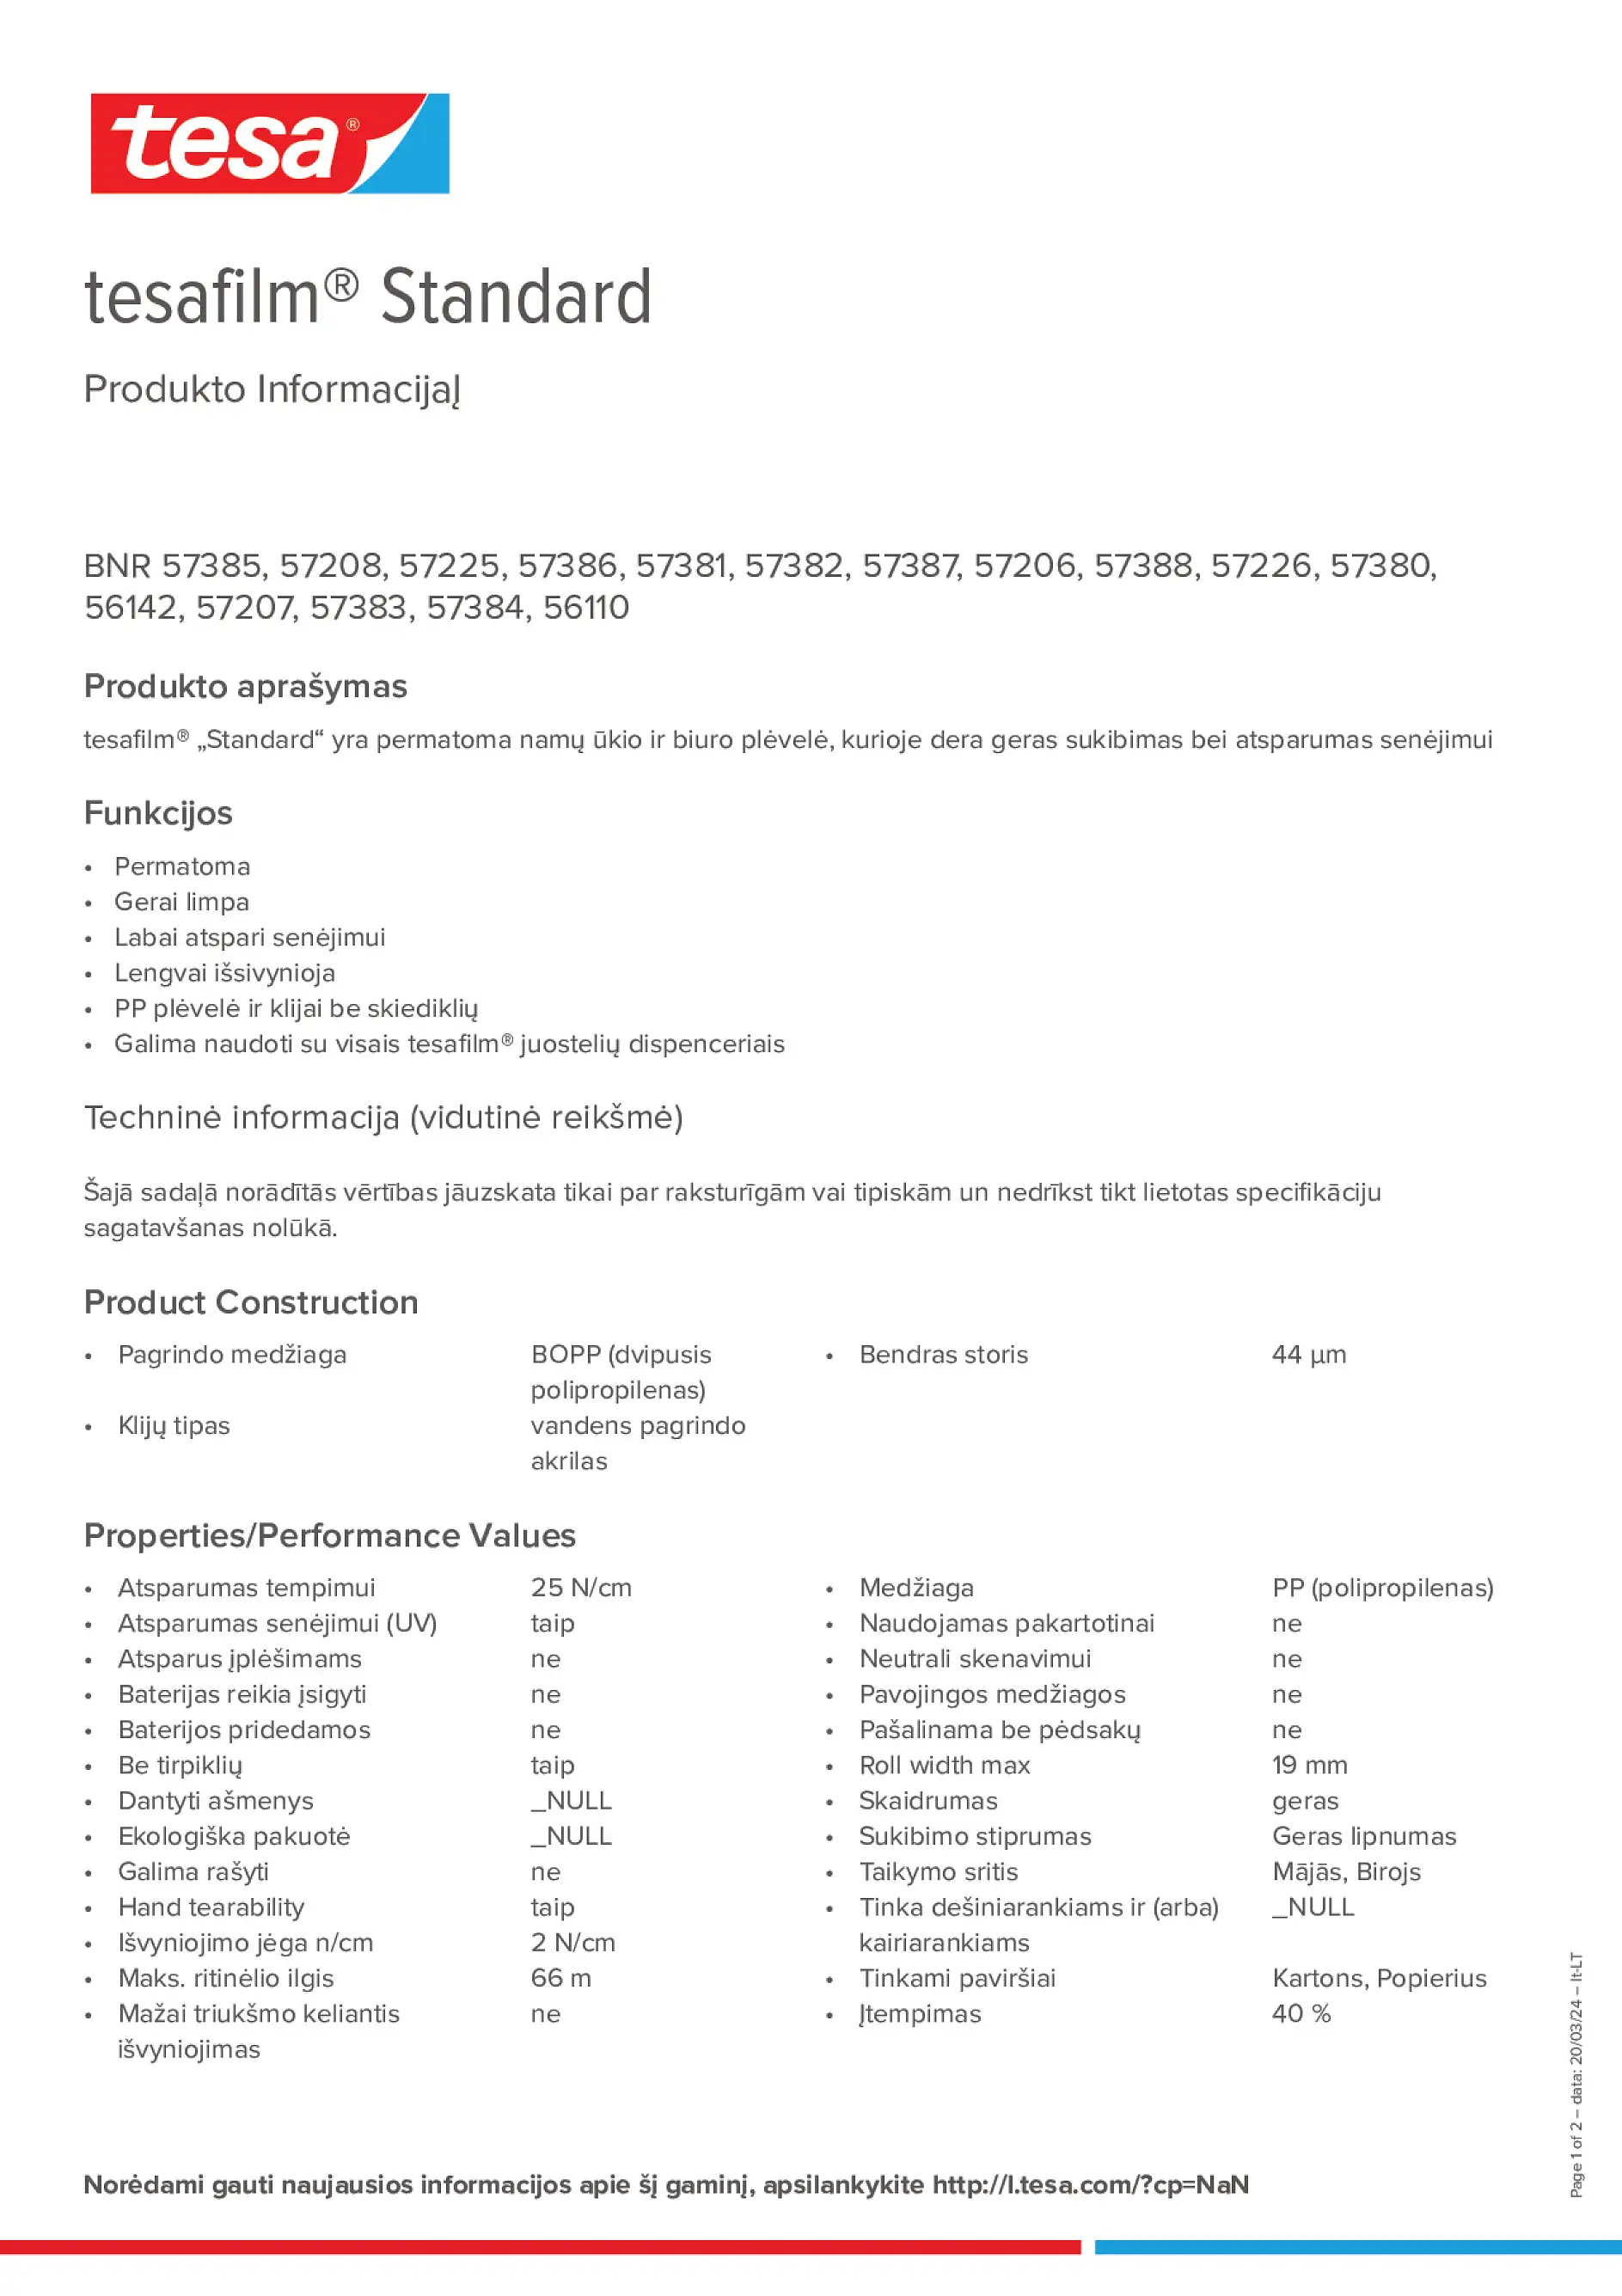 Product information_tesafilm® 57226_lt-LT